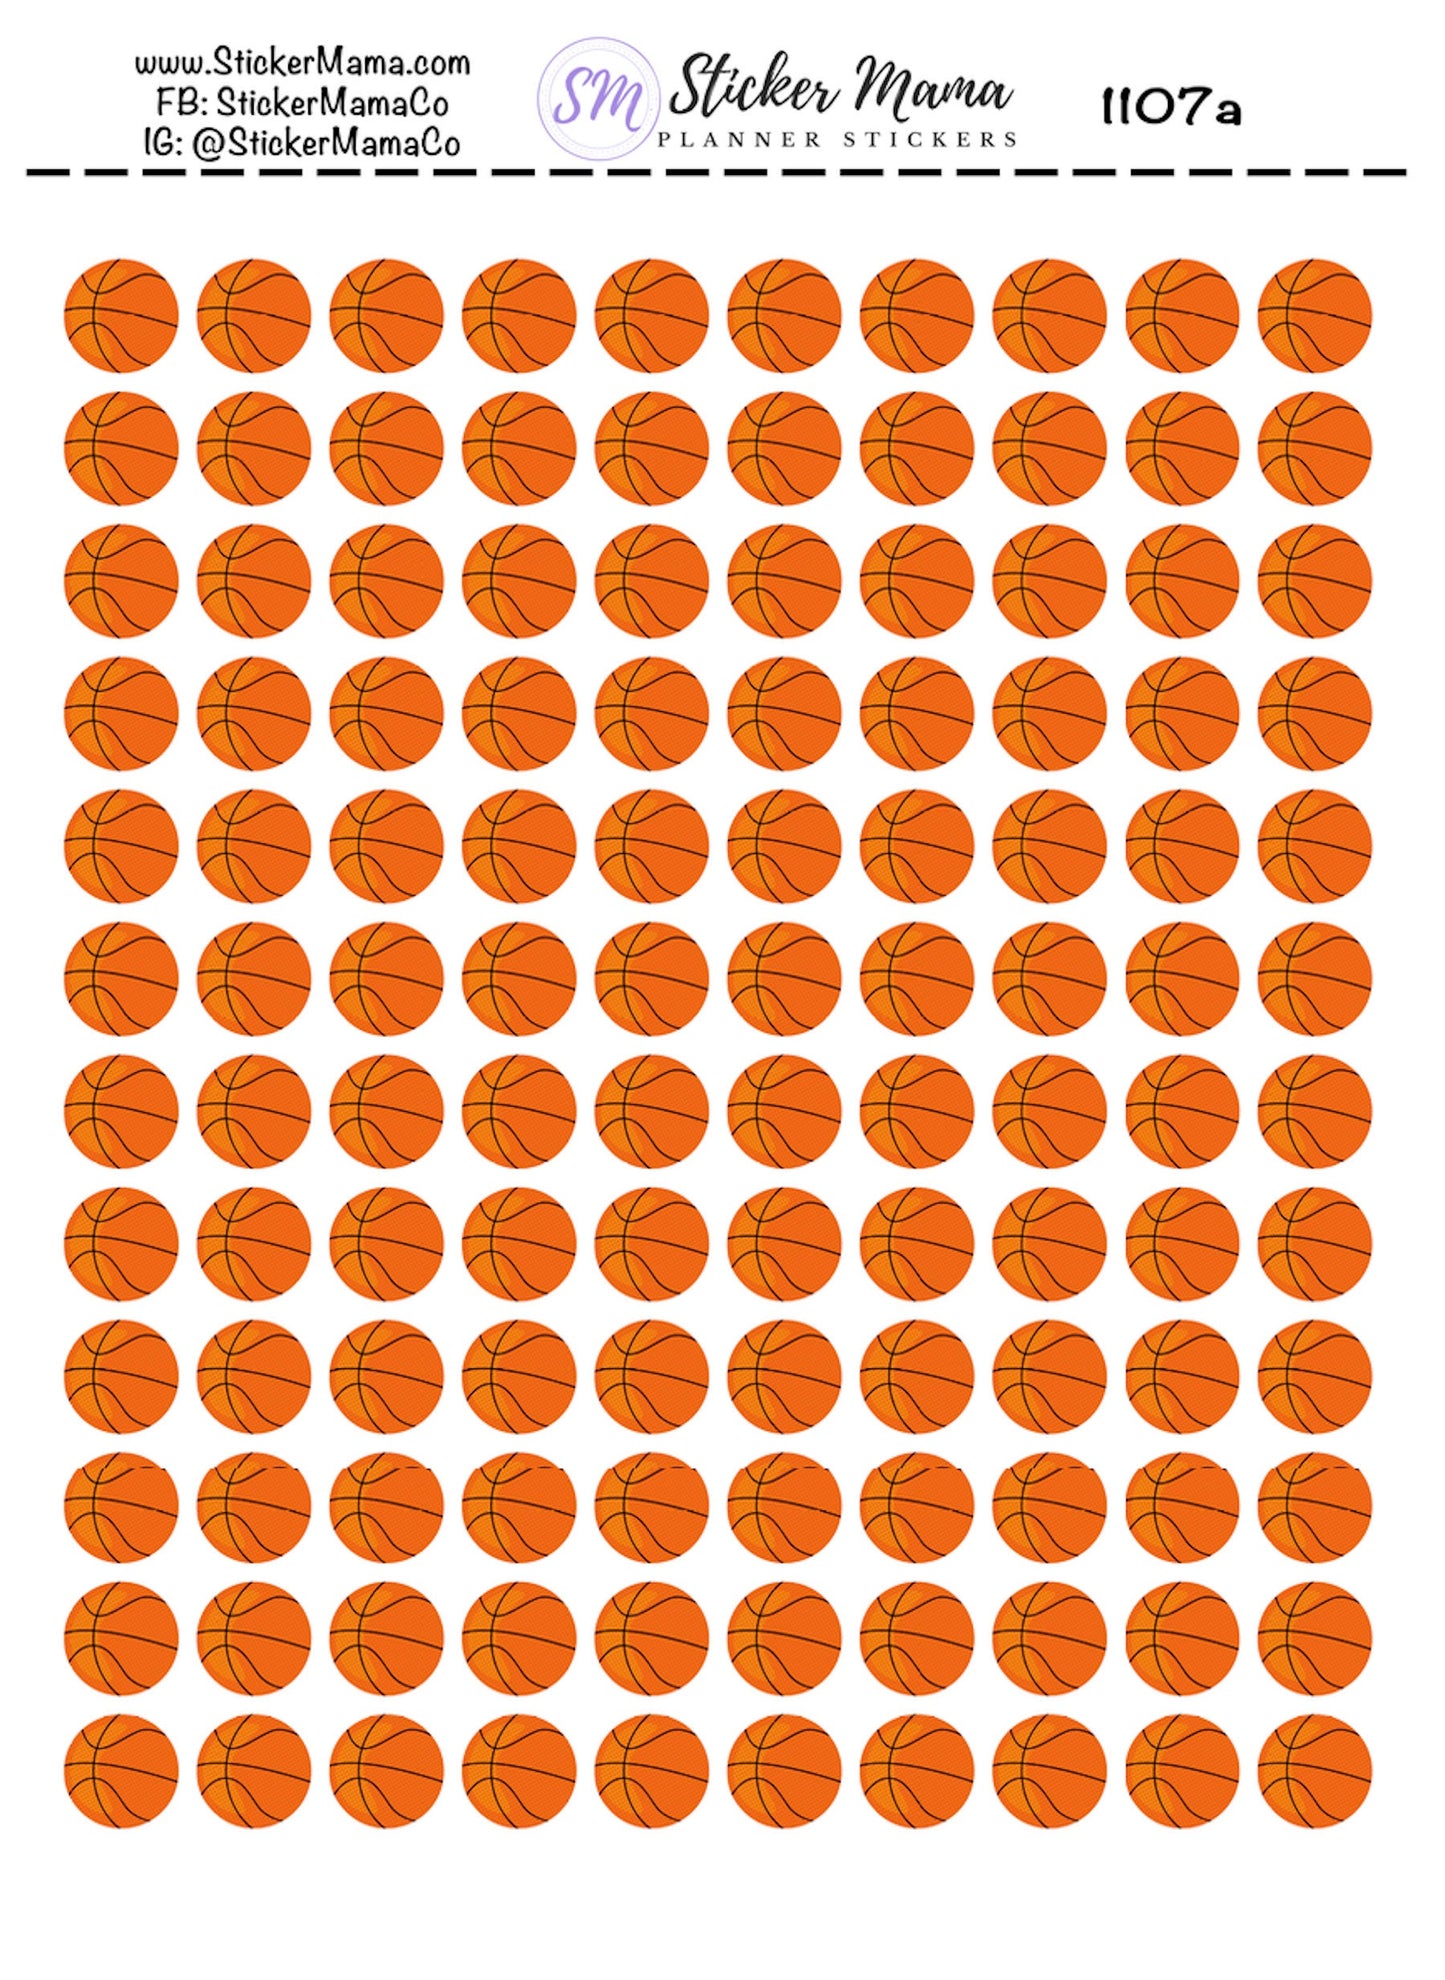 1107 - BASKETBALL PLANNER STICKERS - Sport Stickers